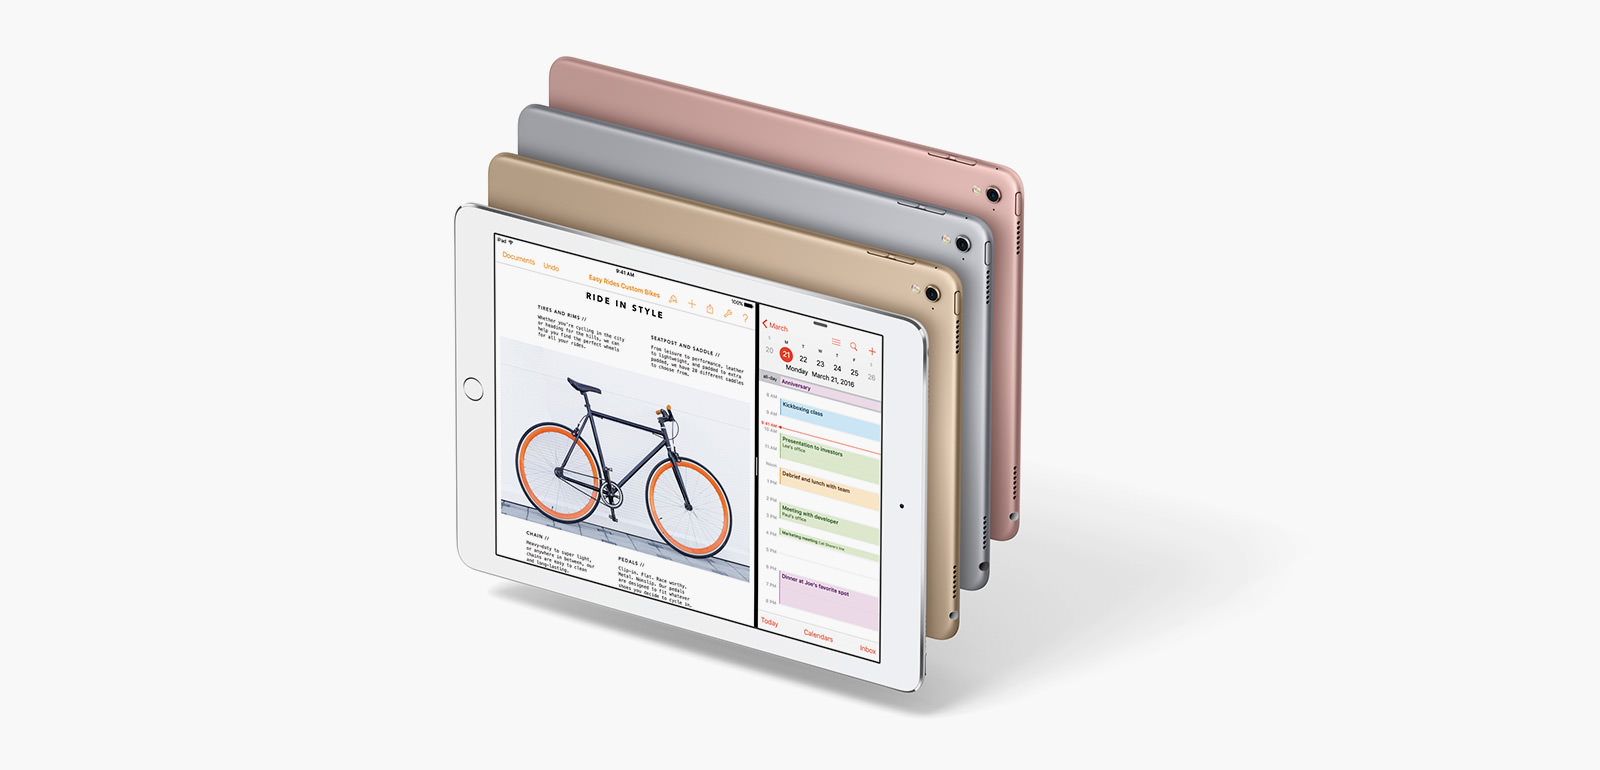 9.7” iPad Pro